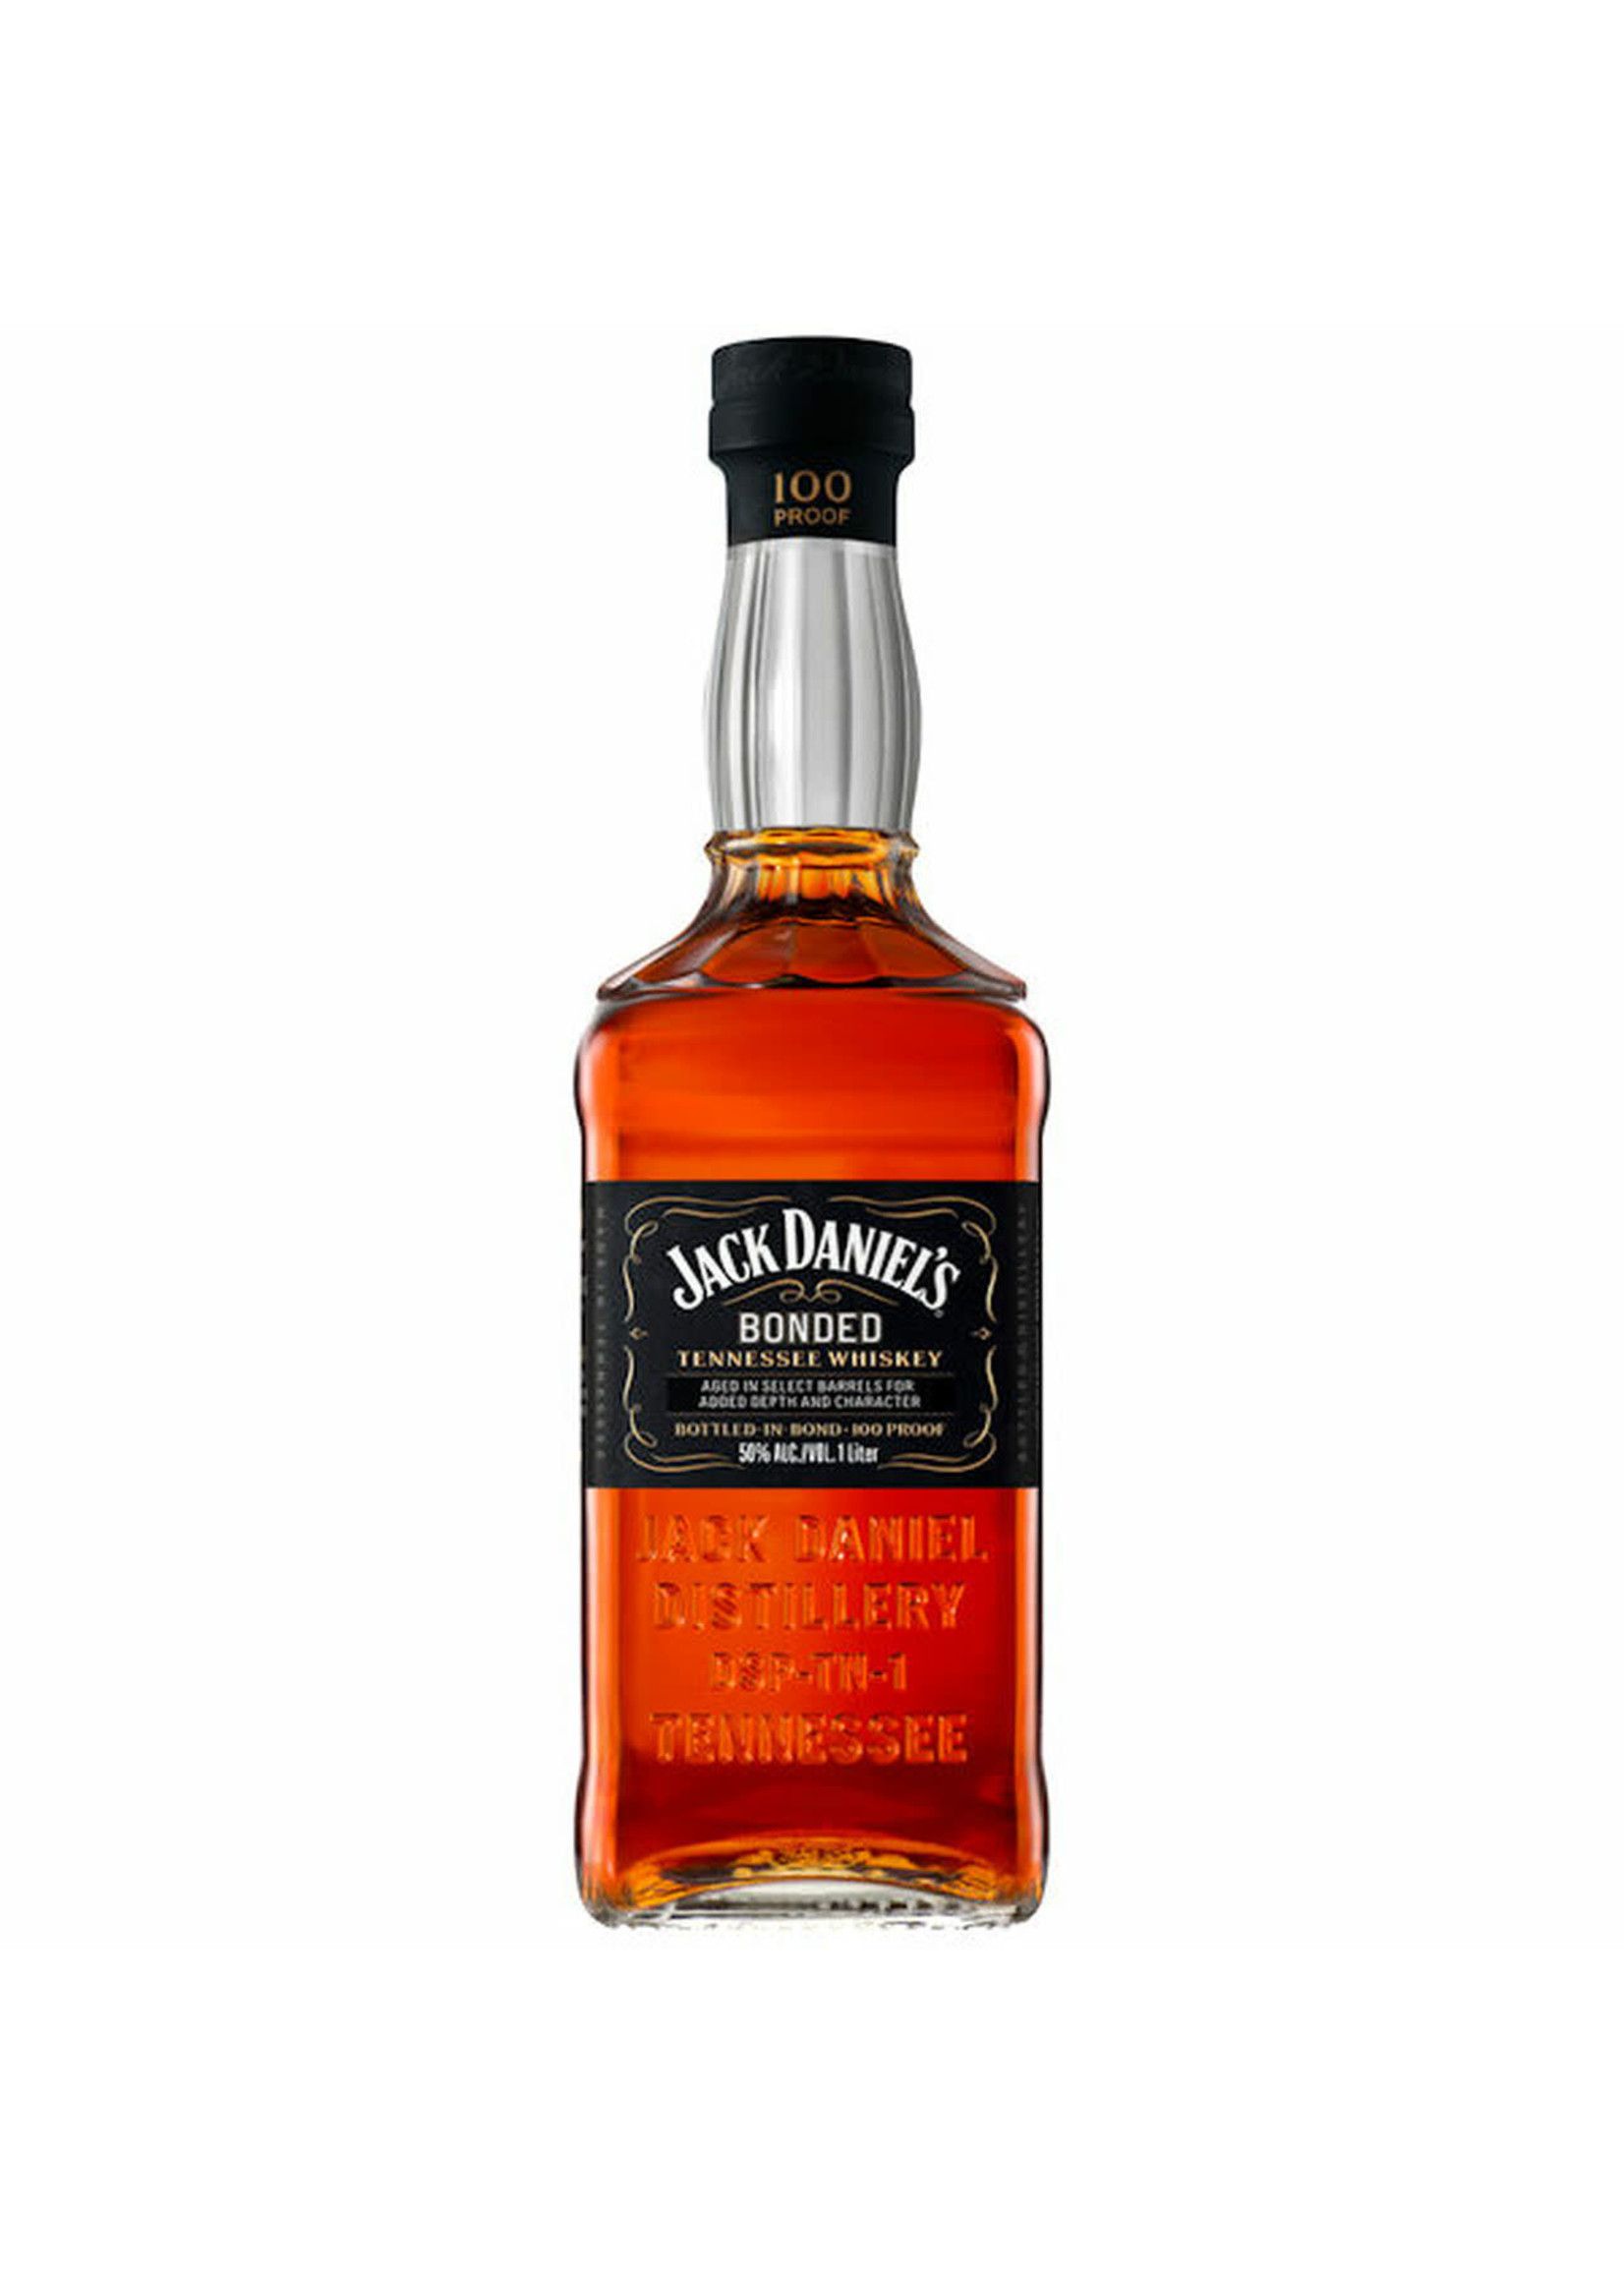 Jack Daniels Jack Daniel's Bonded Tennessee Whiskey 100Proof 700ml